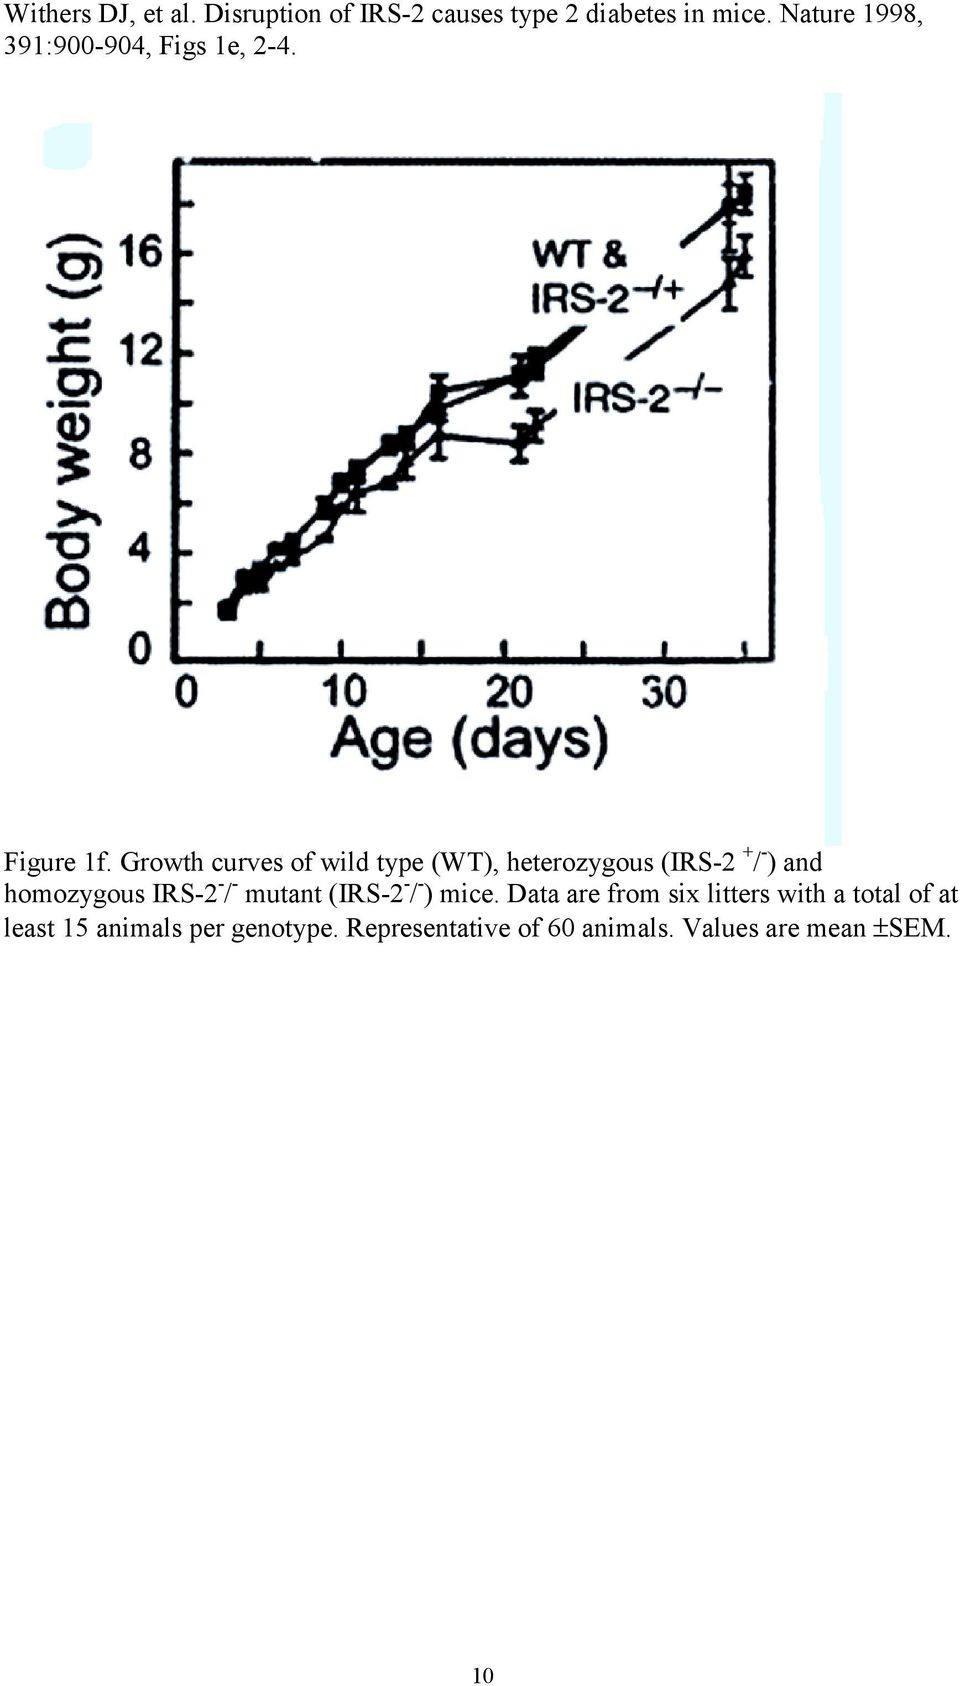 Growth curves of wild type (WT), heterozygous (IRS-2 + / - ) and homozygous IRS-2 - / -